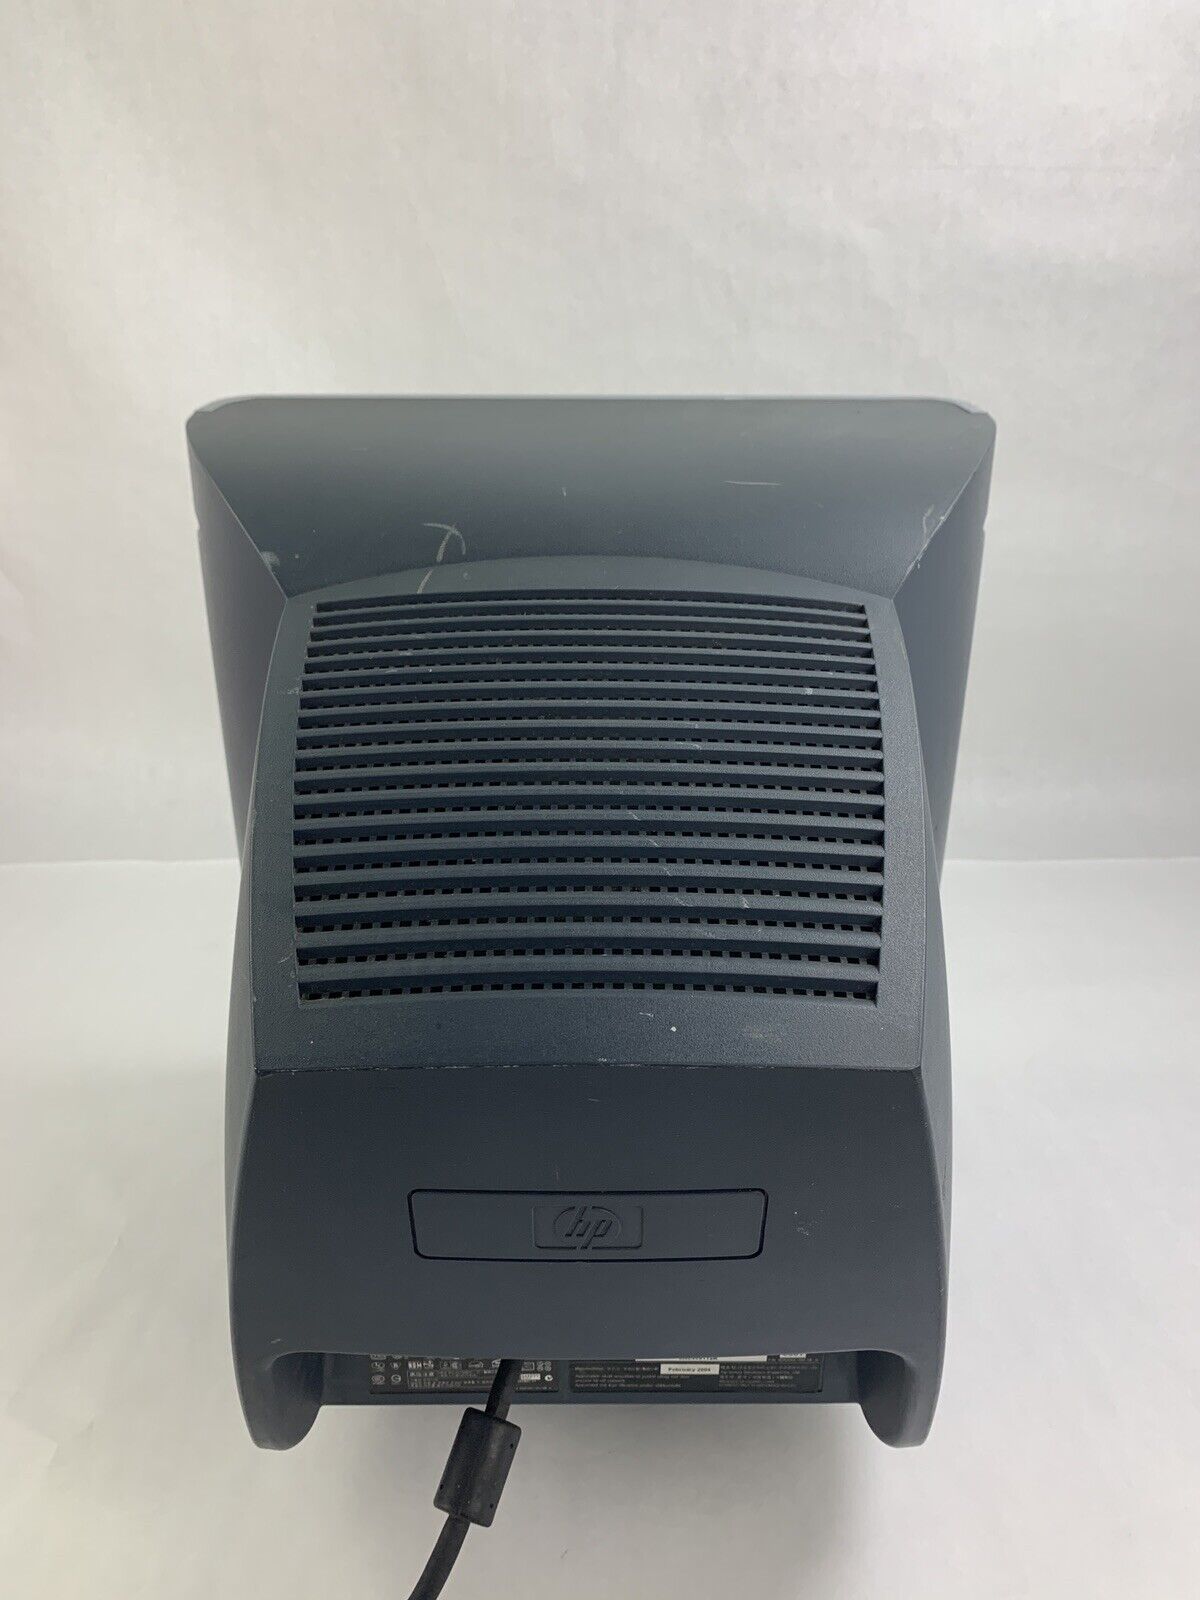 HP Pavilion 16” Anti-Glare MX704 CRT VGA Computer Monitor Retro Gaming Tested